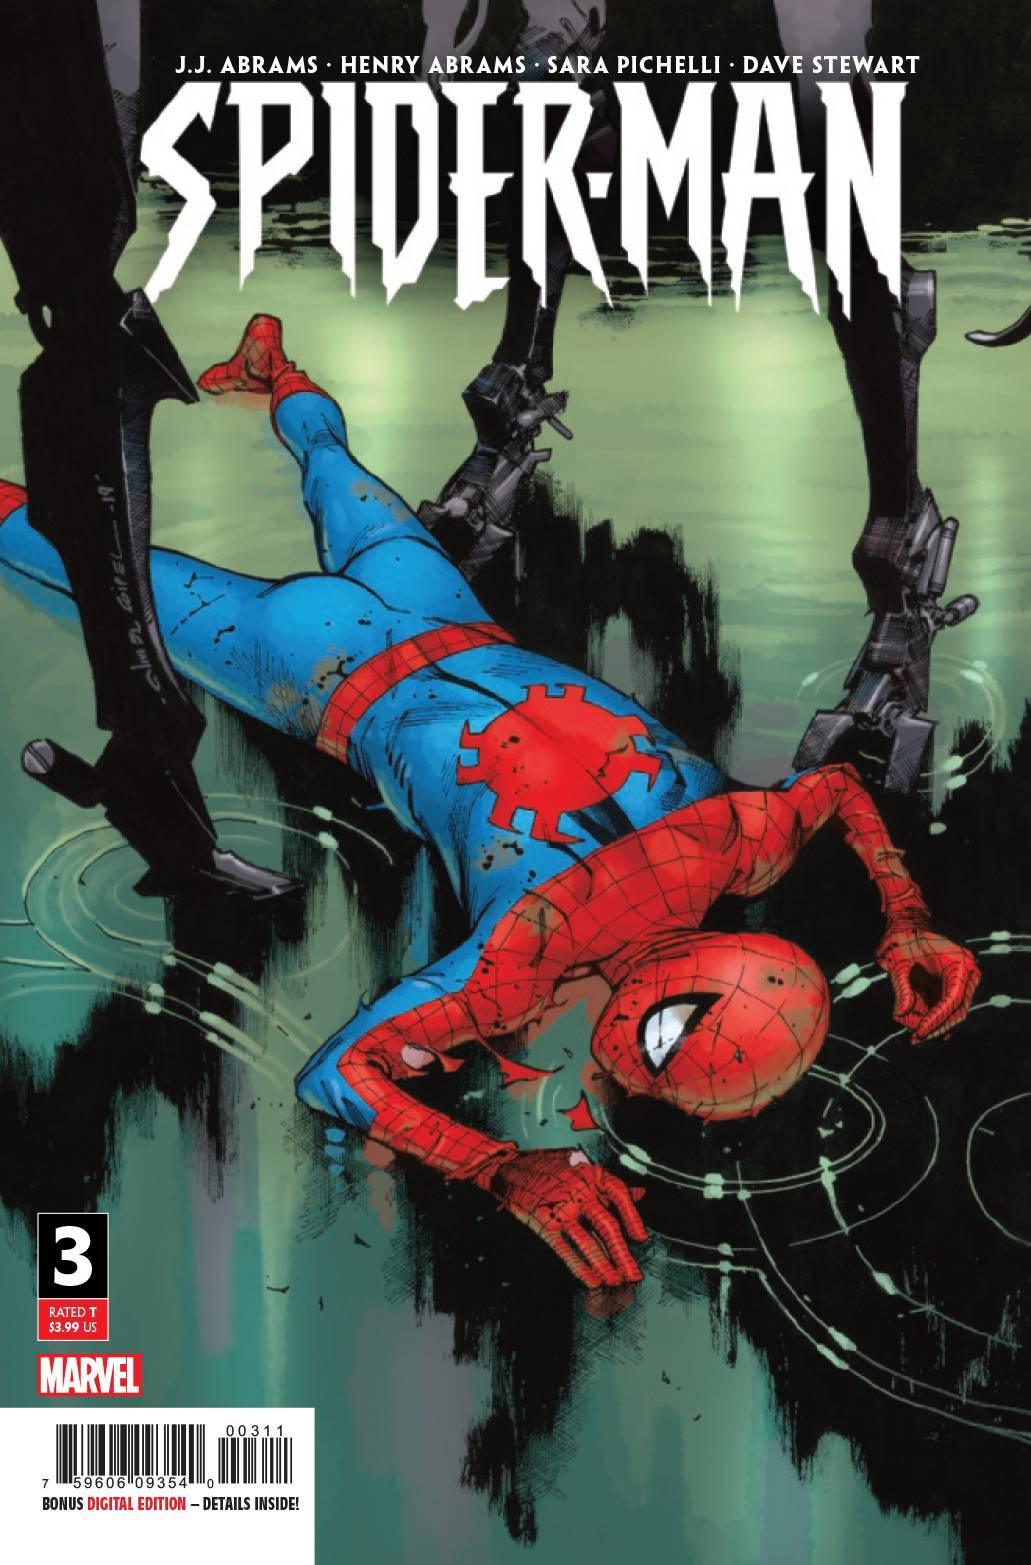 SPIDER-MAN VOL 3 (2019) #3 (VF/NM) - Kings Comics